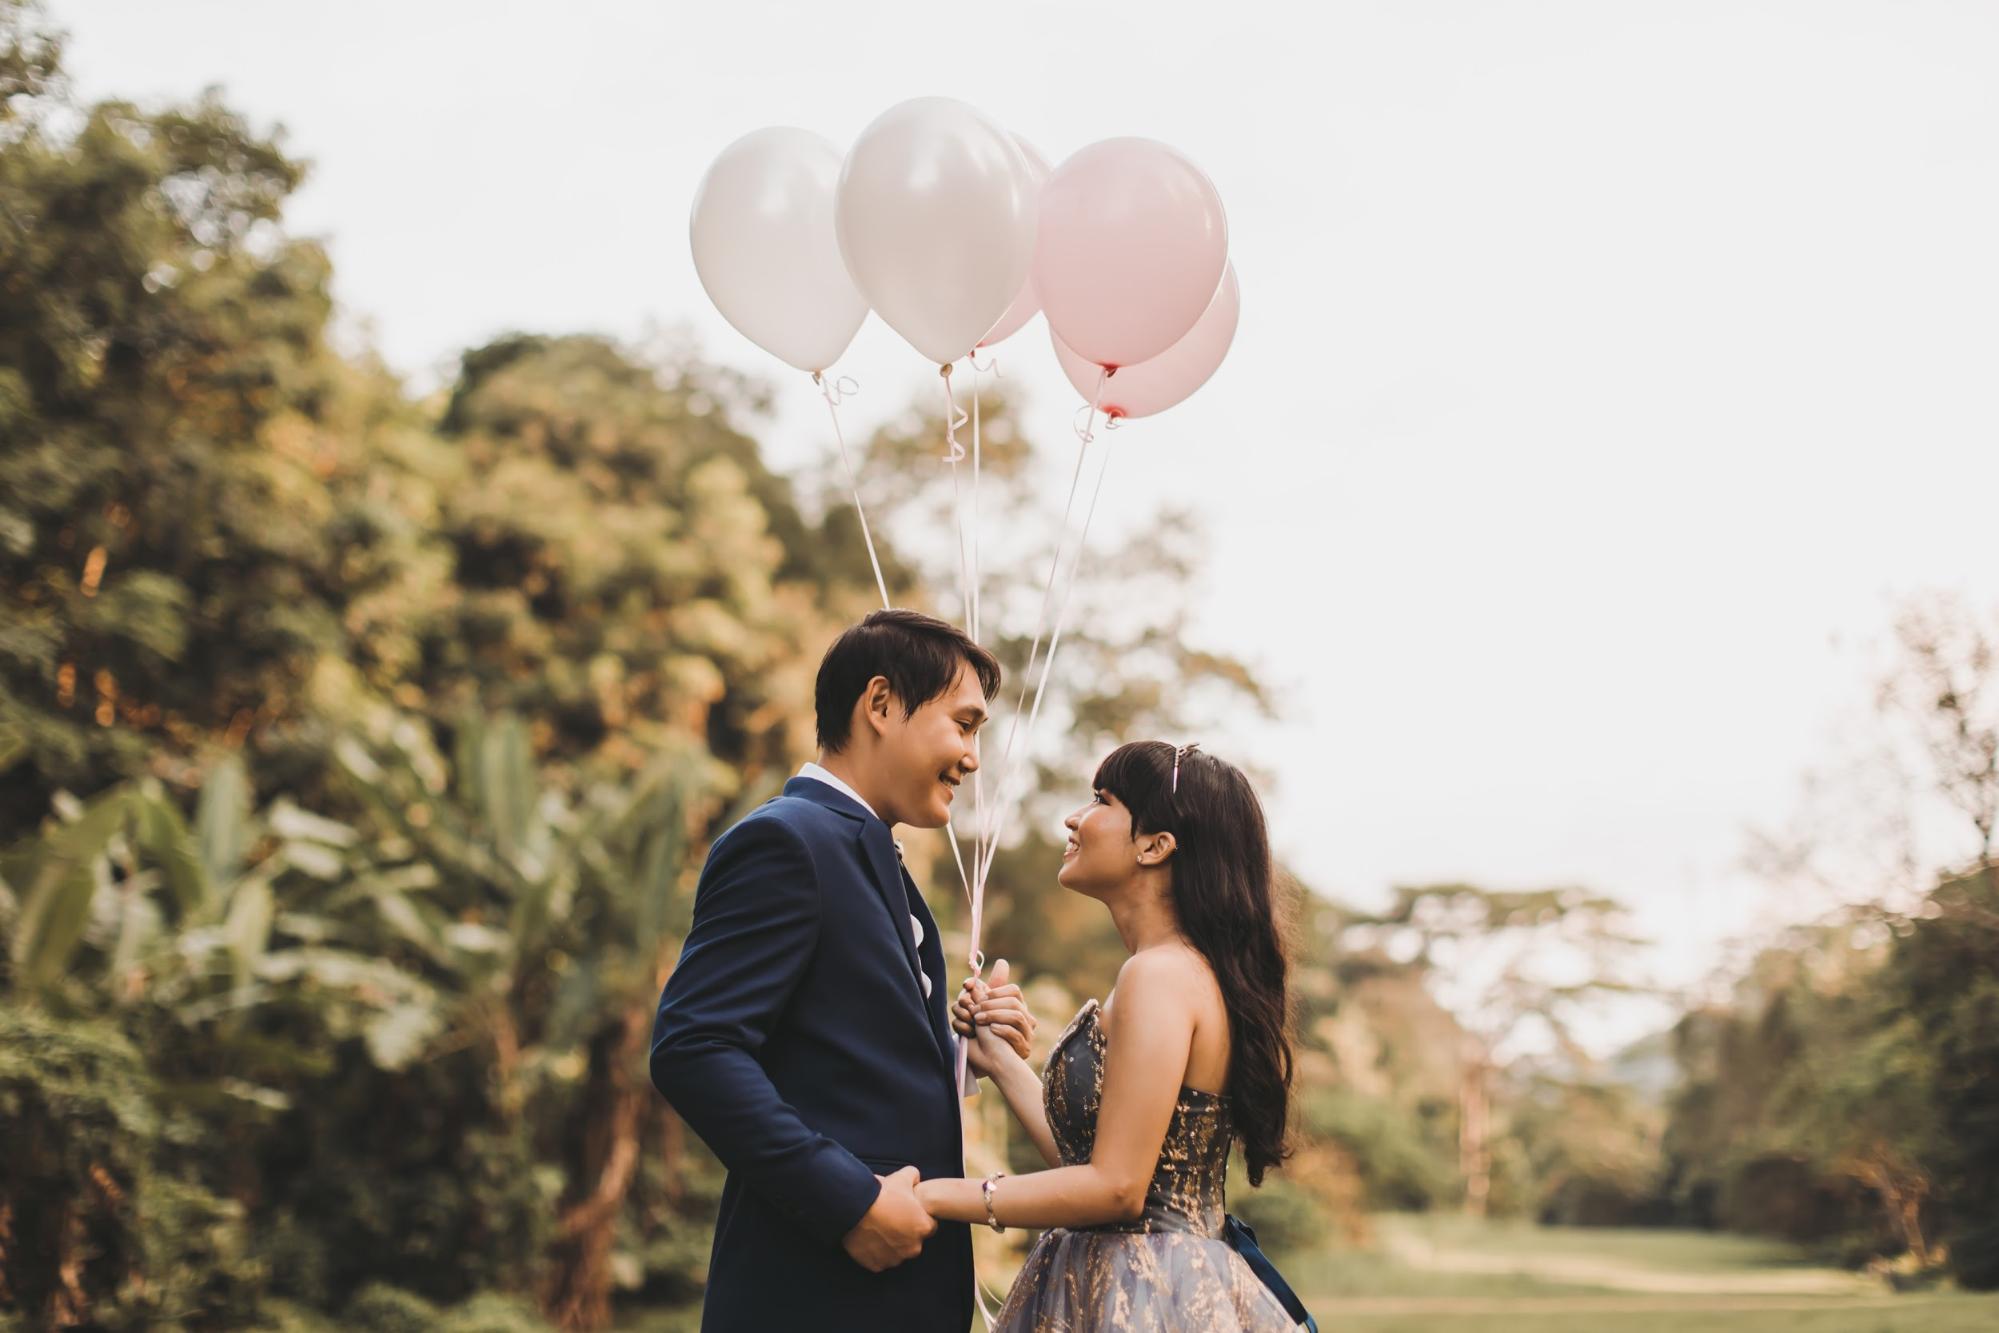 Pre-wedding photoshoot balloons